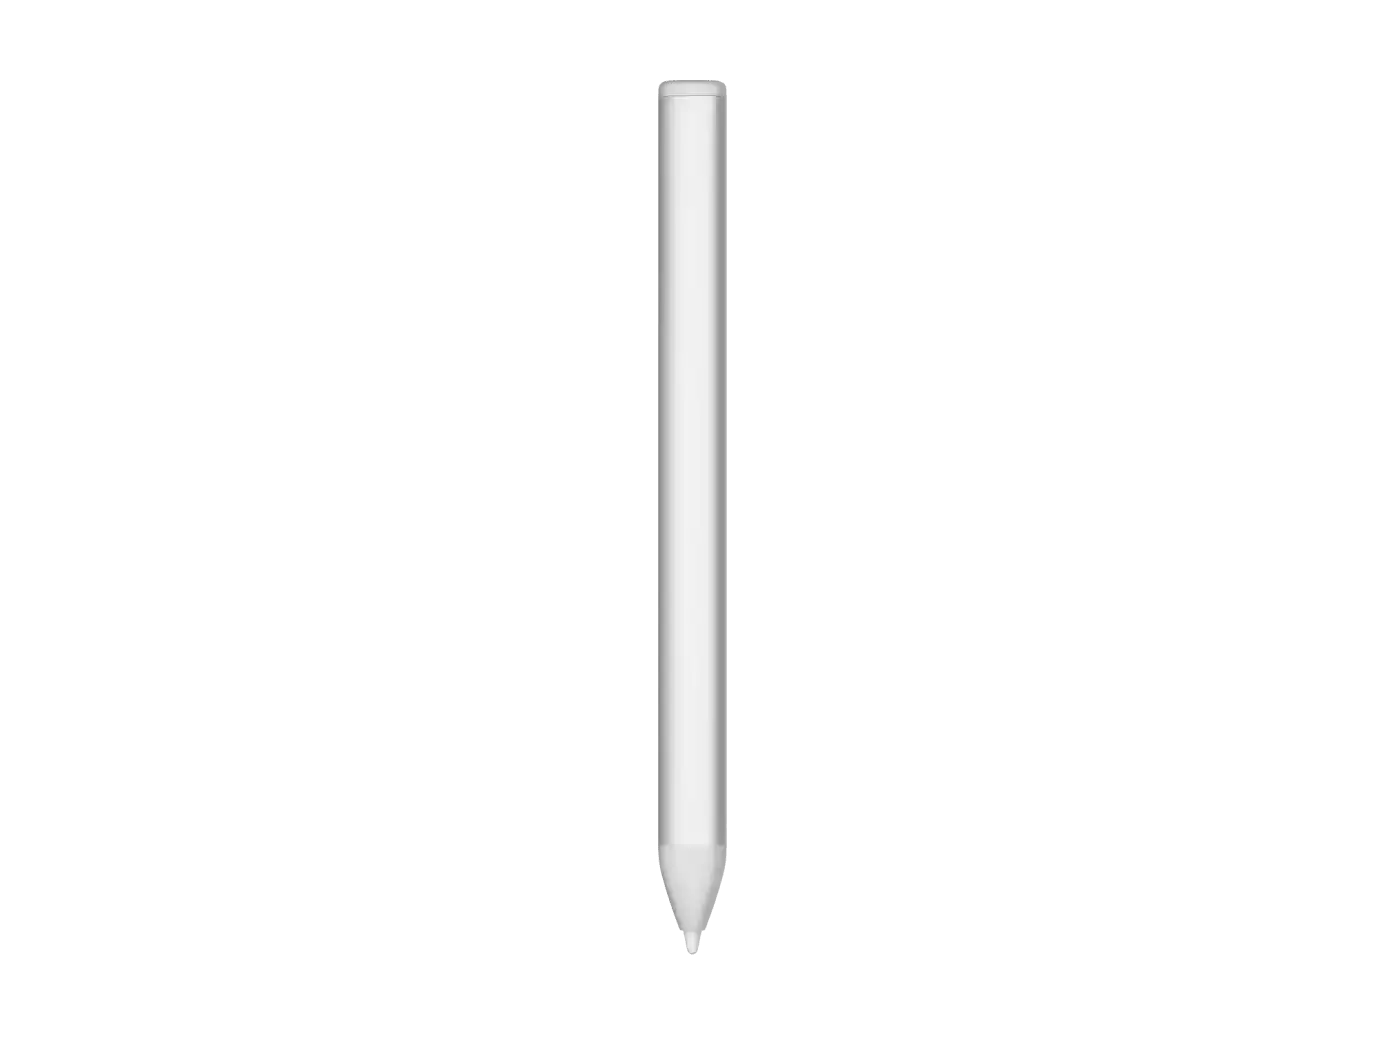 Logitech Crayon USB-C iPad Uyumlu Dijital Pencil 914-000074